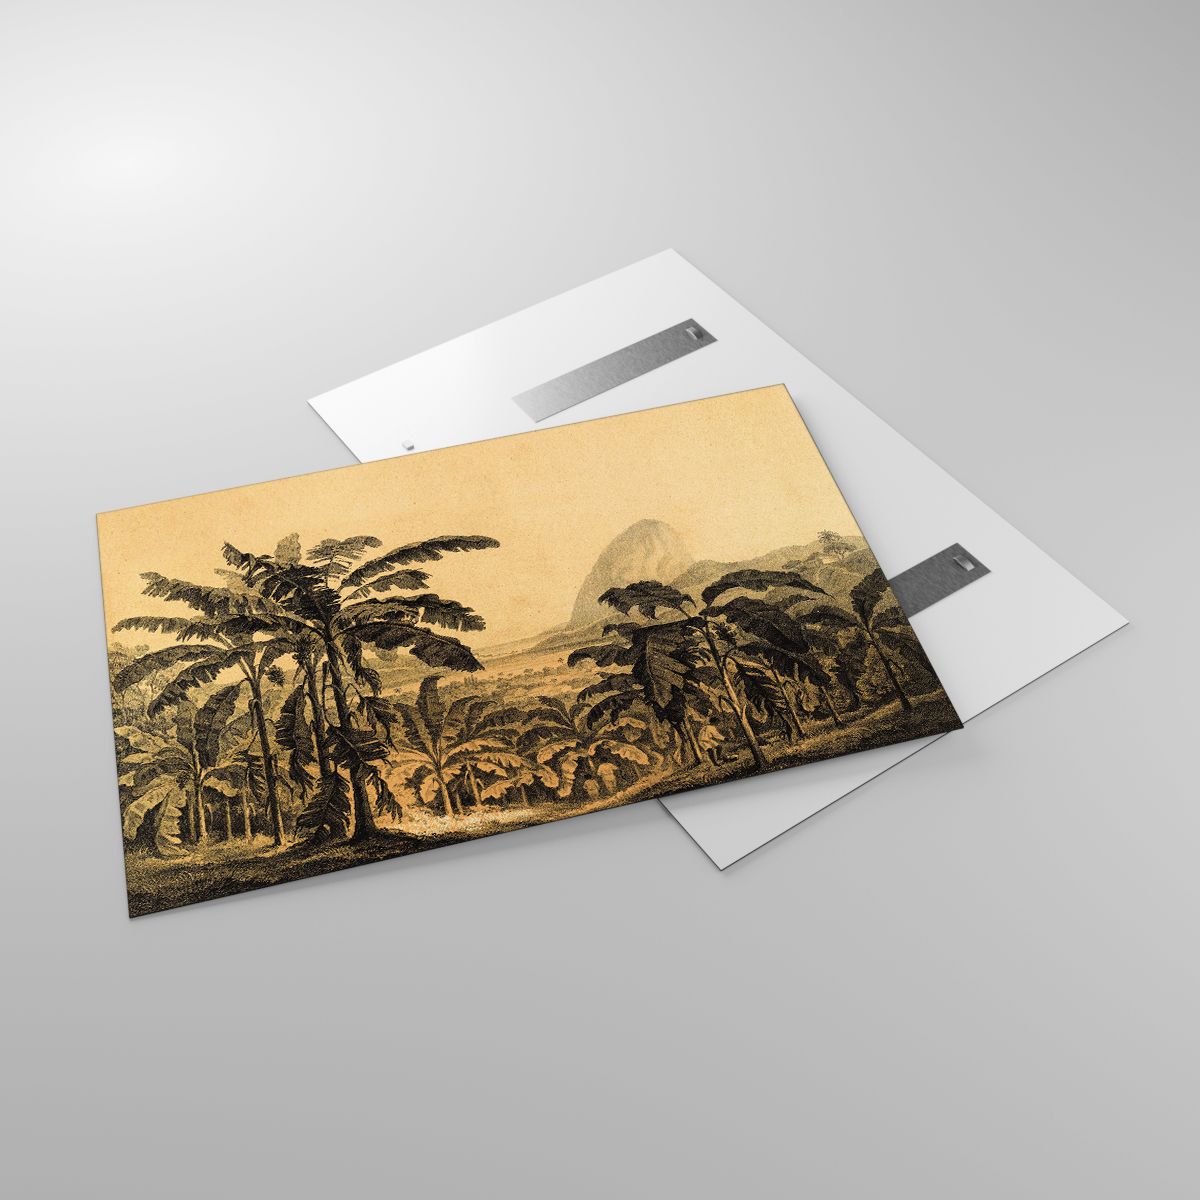 Obrazy Krajobraz, Obrazy Plantacja Bananów, Obrazy Bananowiec, Obrazy Roślina Tropikalna, Obrazy Sepia